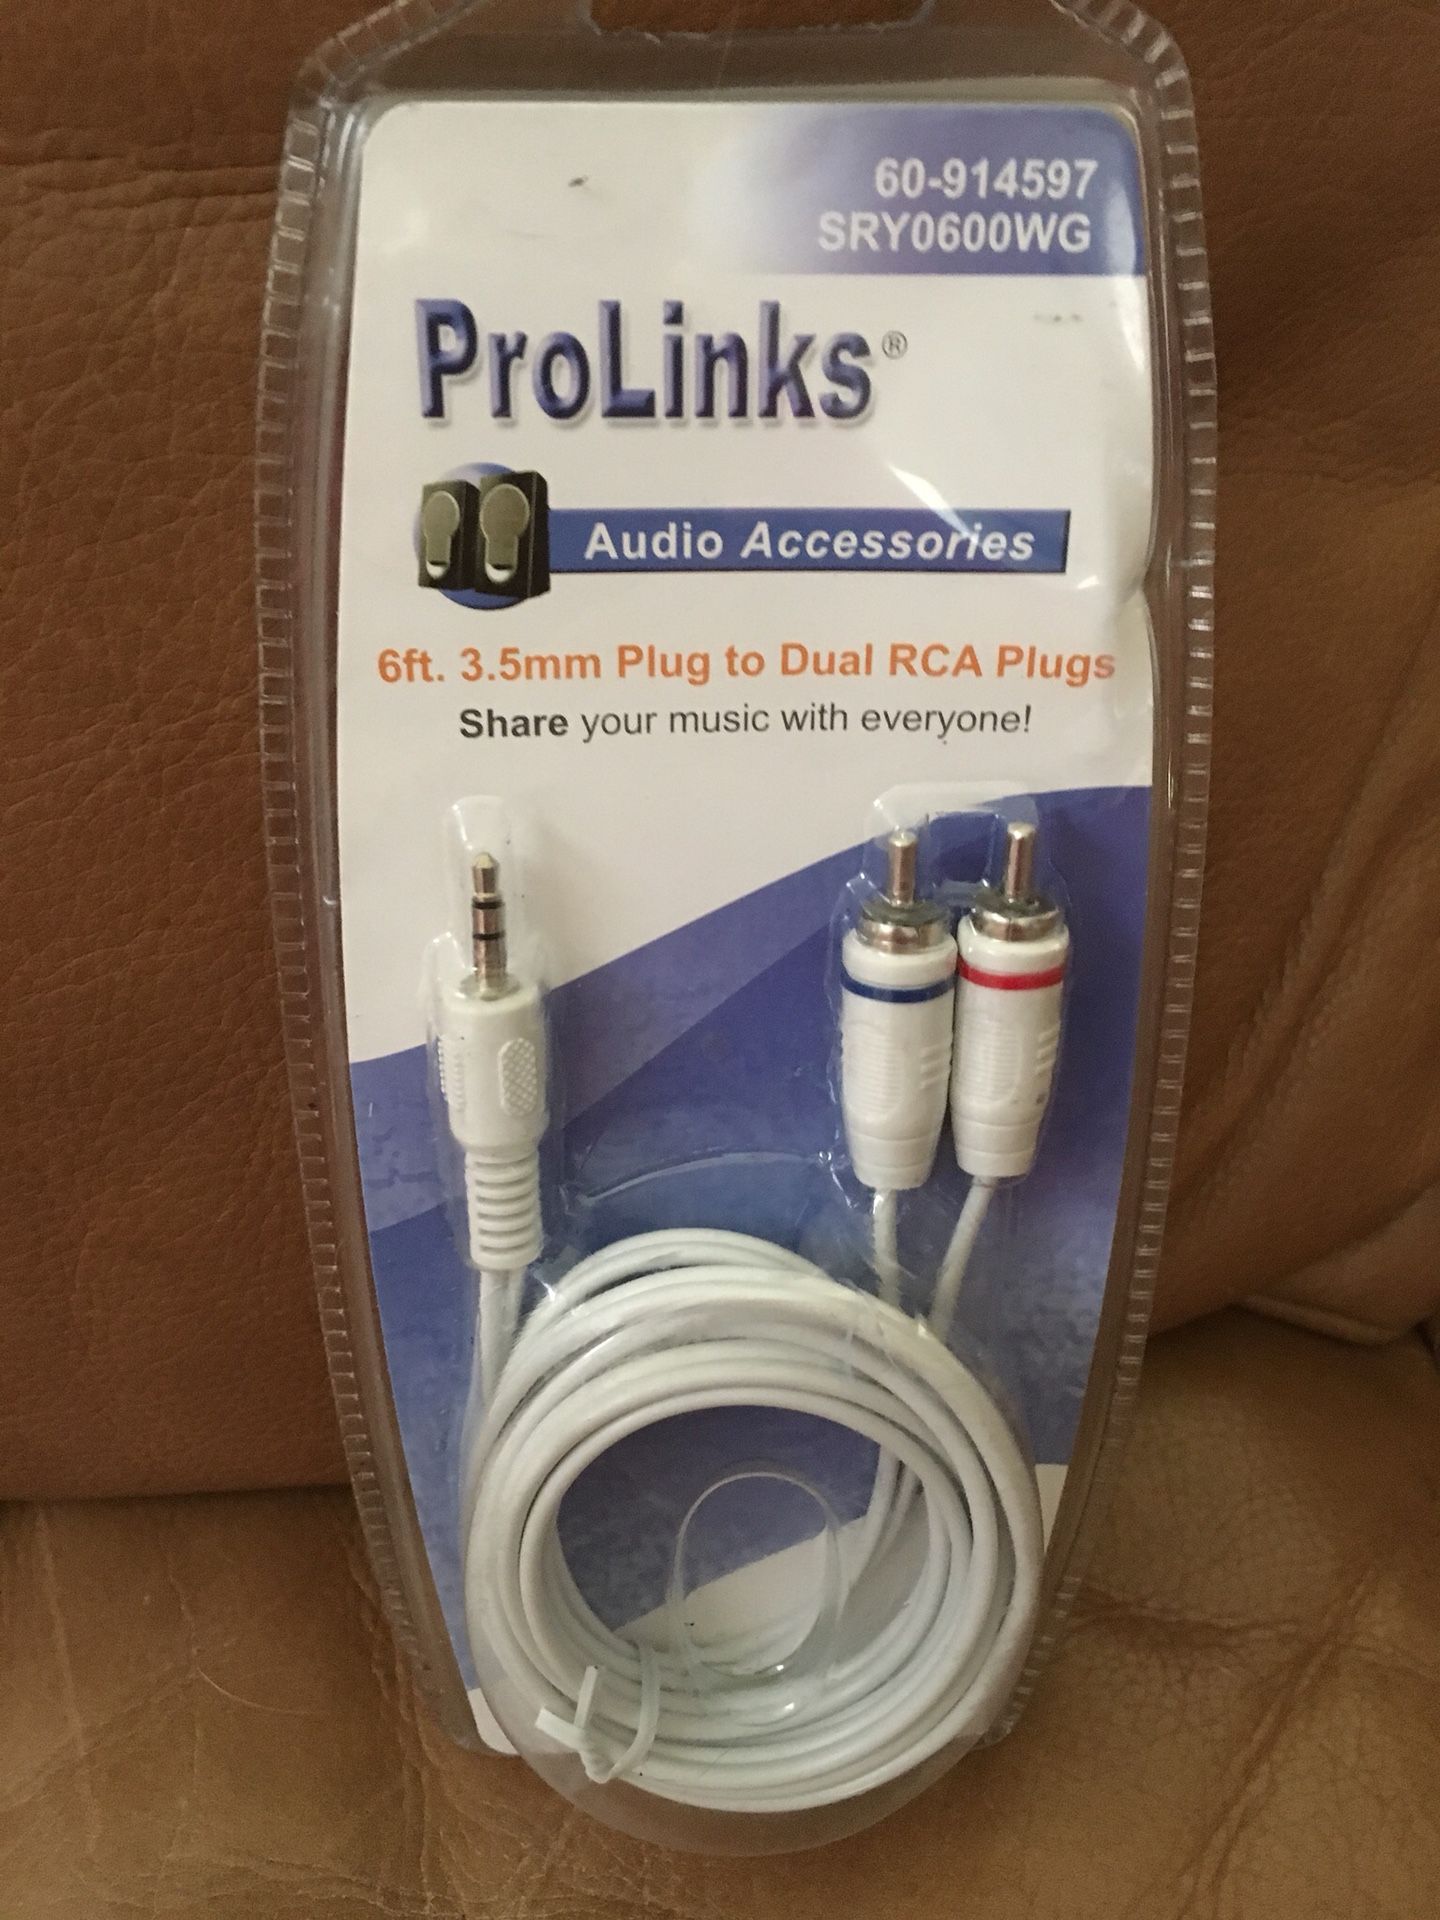 Brand new Pro Links audio accessories kit